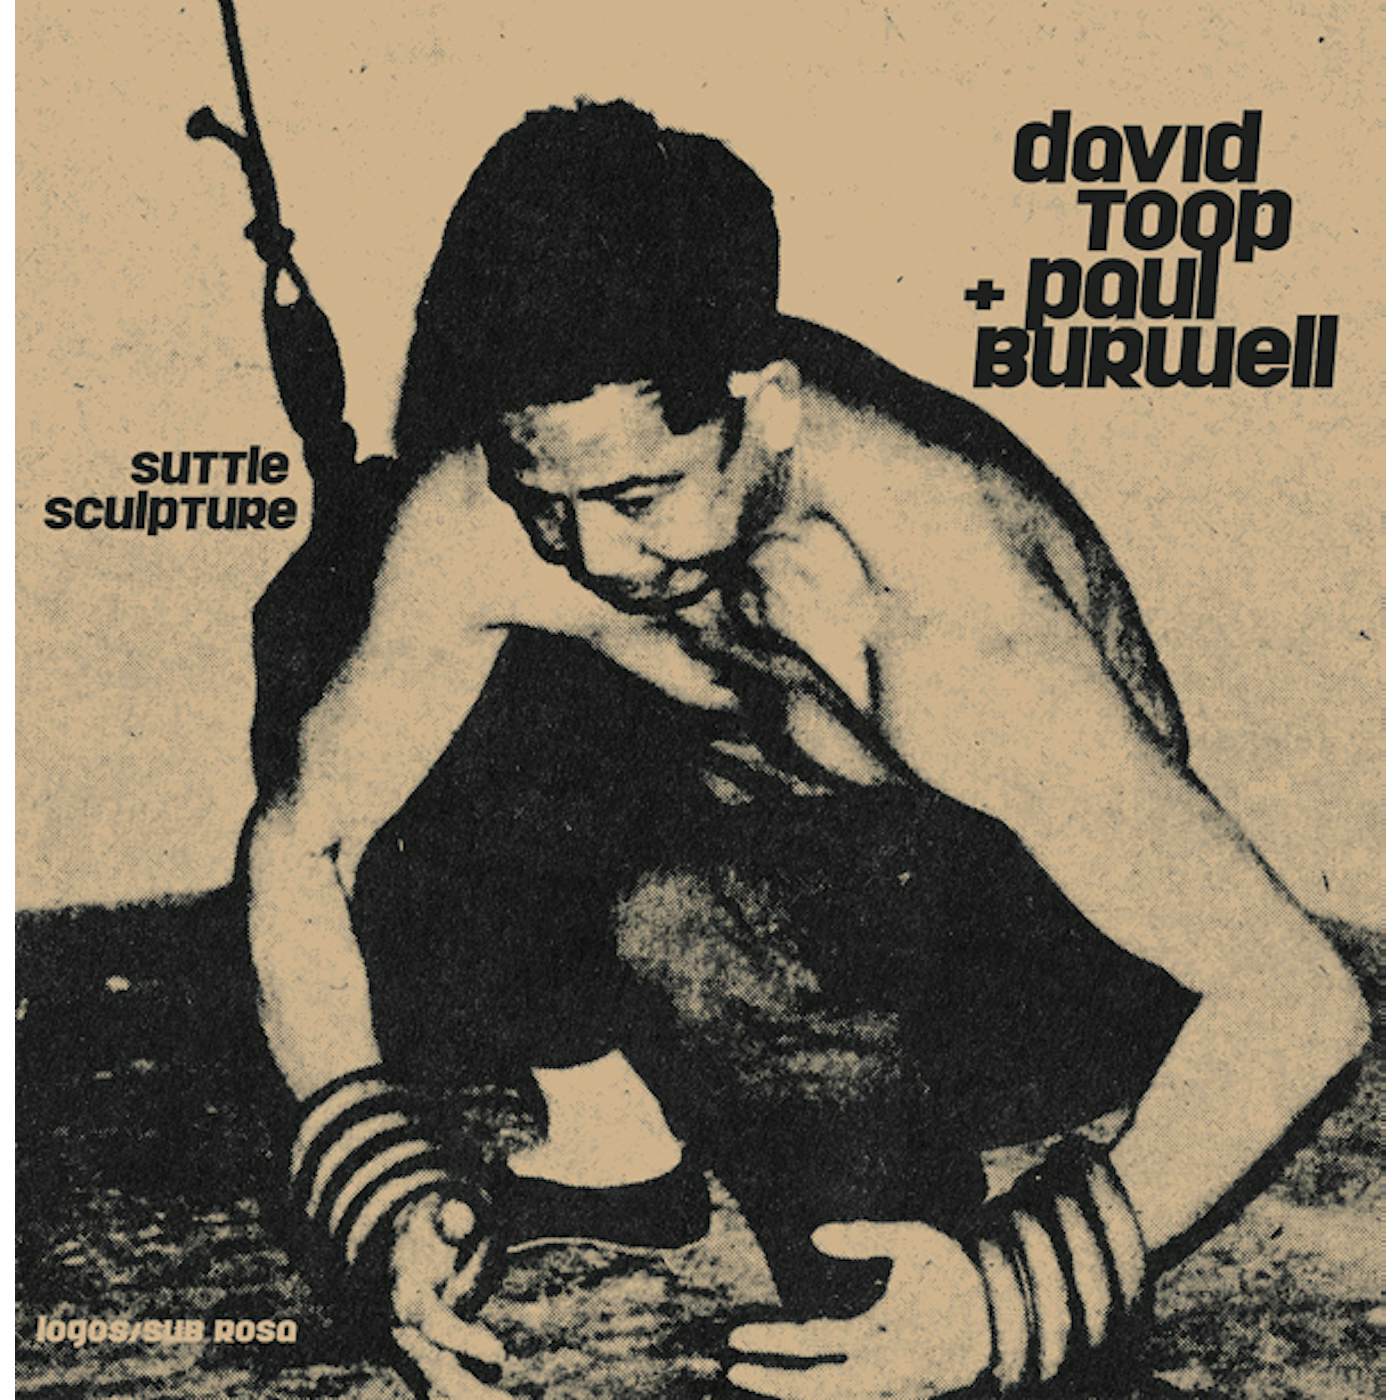 Daivd Toop / Daivd Burwell SUTTLE SCULPTURE Vinyl Record